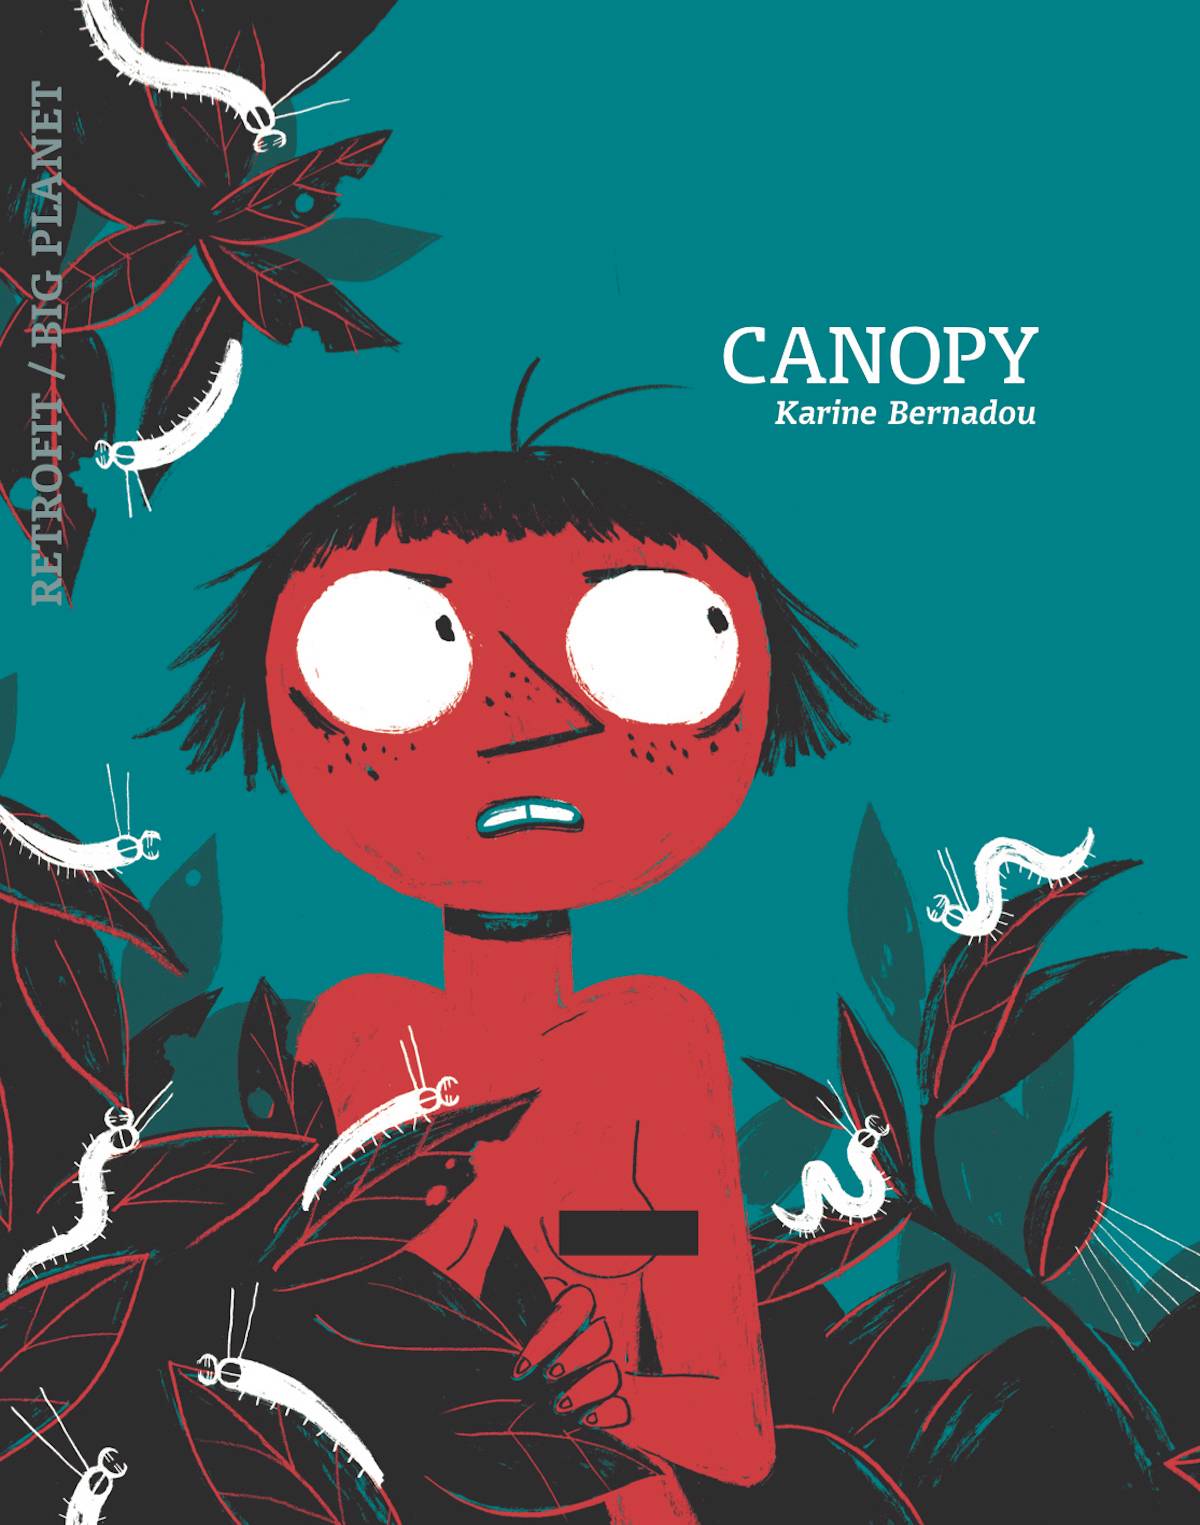 Canopy Graphic Novel